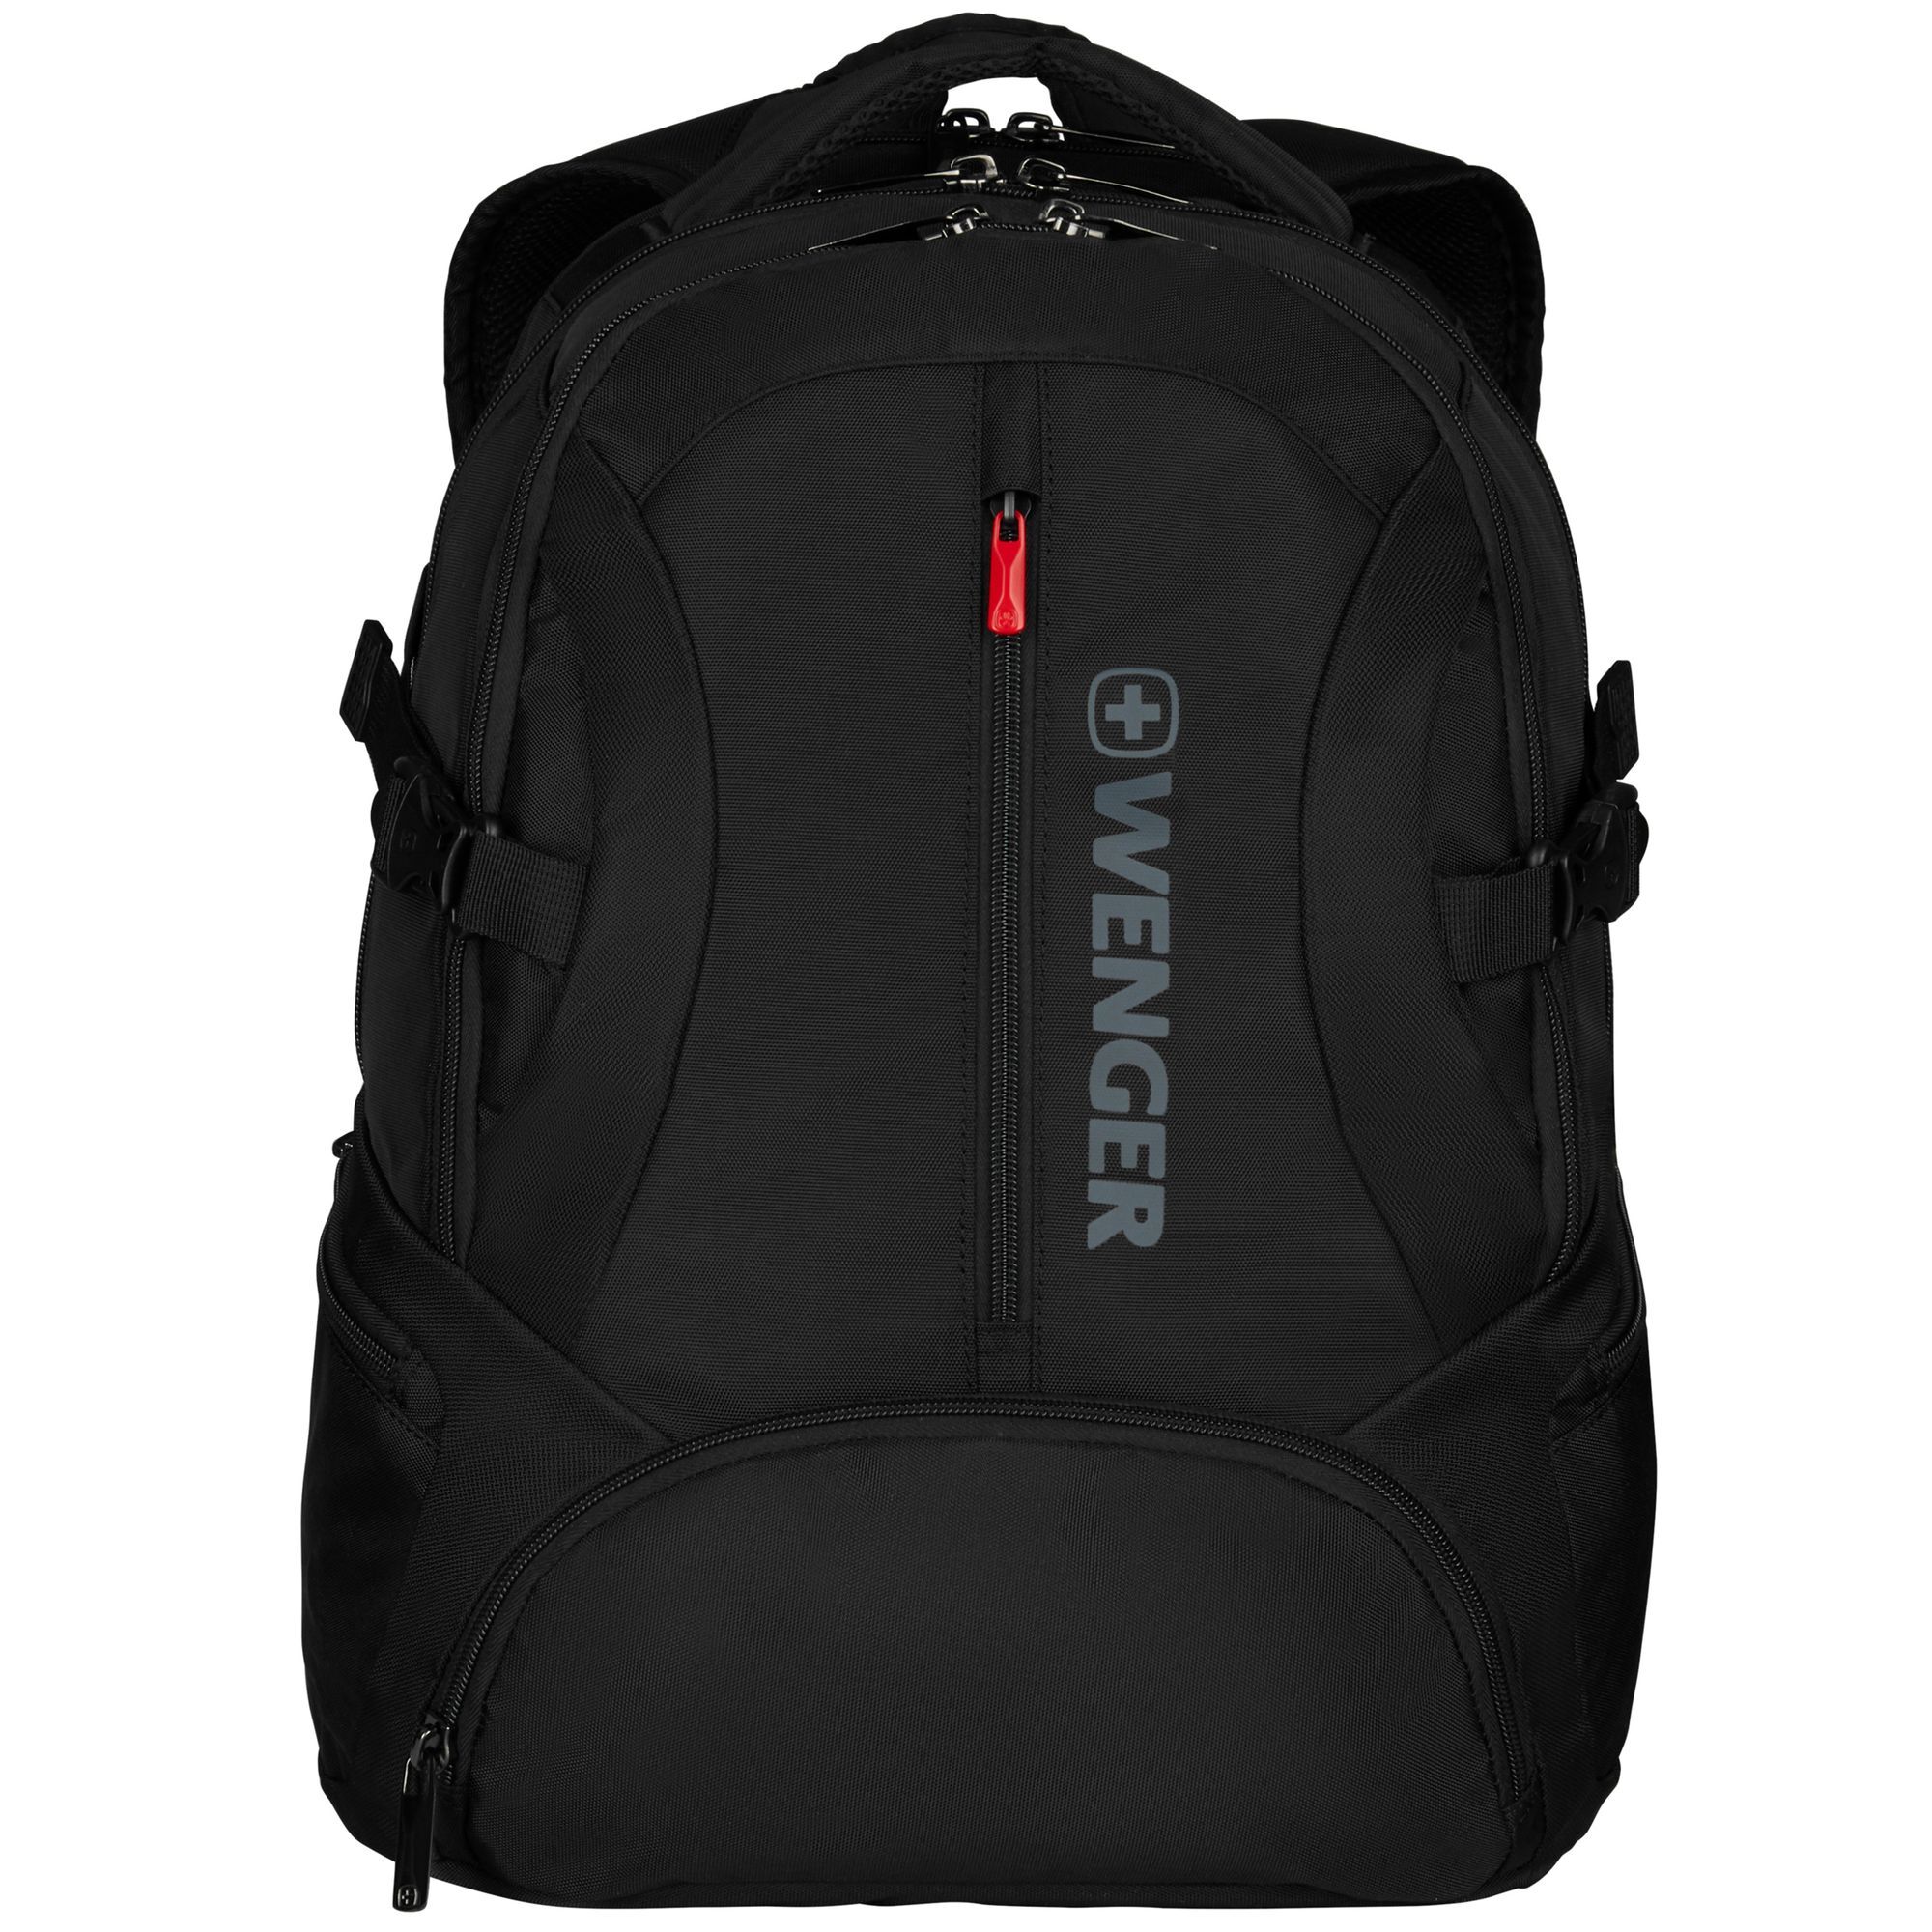 Рюкзак Wenger Transit 16 46 cm Laptopfach, черный рюкзак wenger reload 14 42 cm laptopfach черный